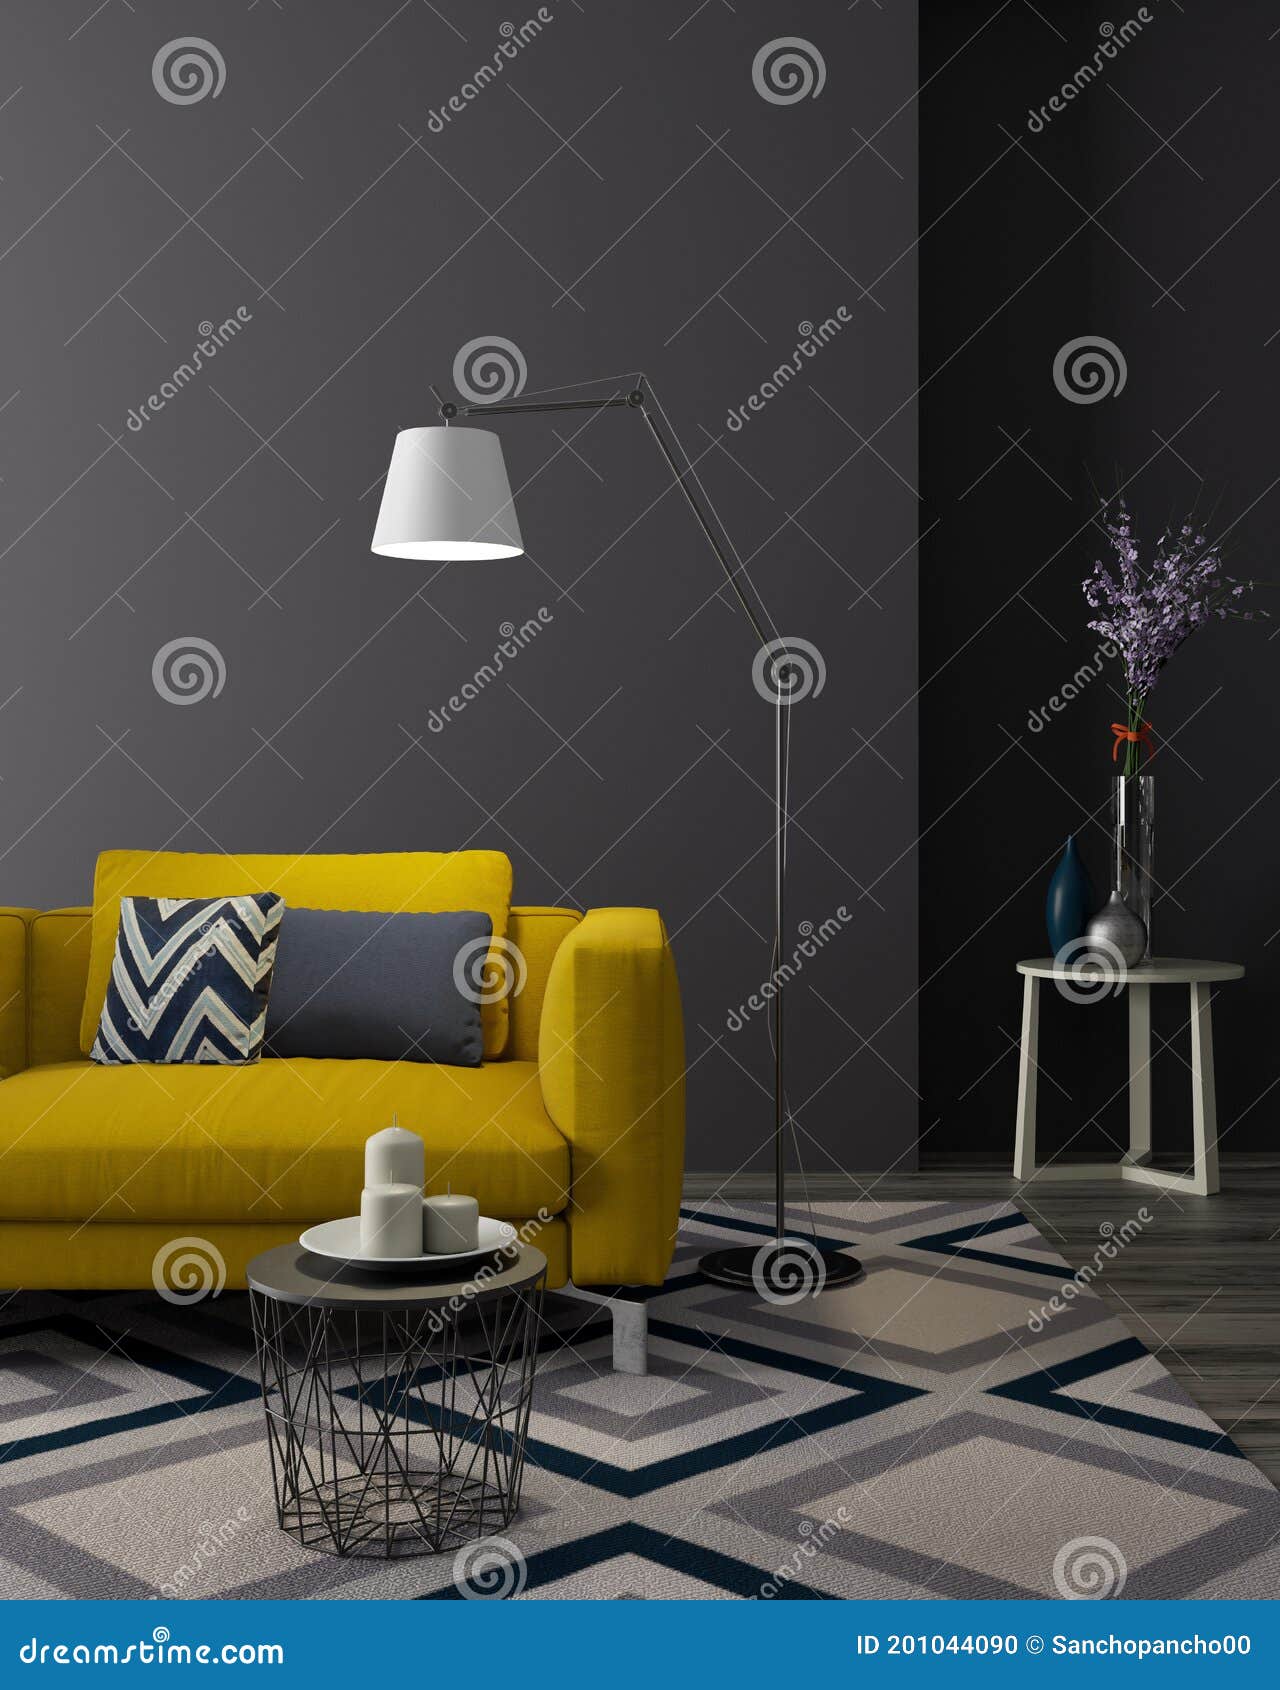 Yellow Sofa In A Dark Living Room 3d Render Stock Illustration Illustration Of Fashionable Interior 201044090